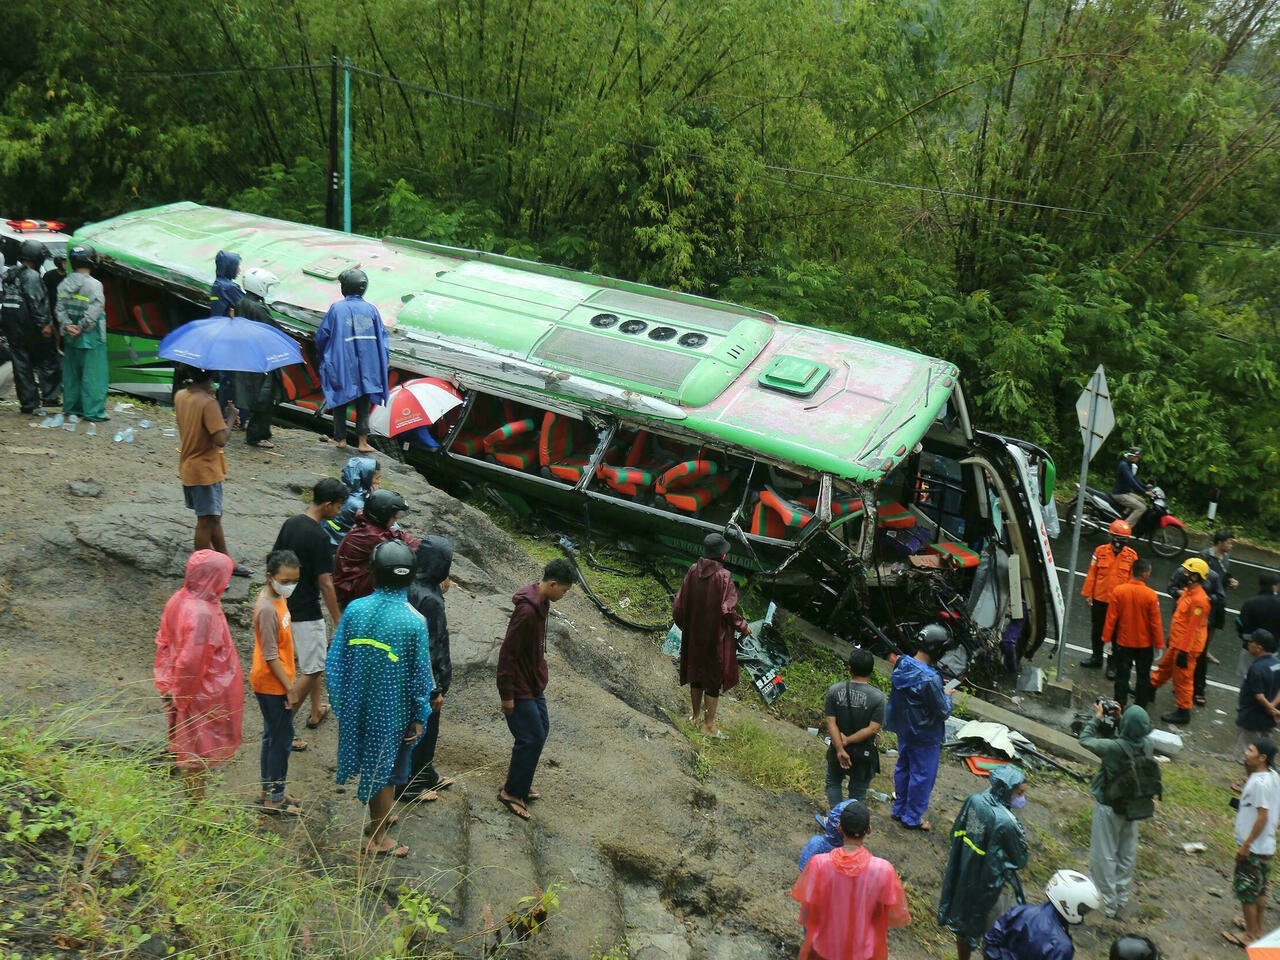 Indonesia bus crash kills 13, injures dozens